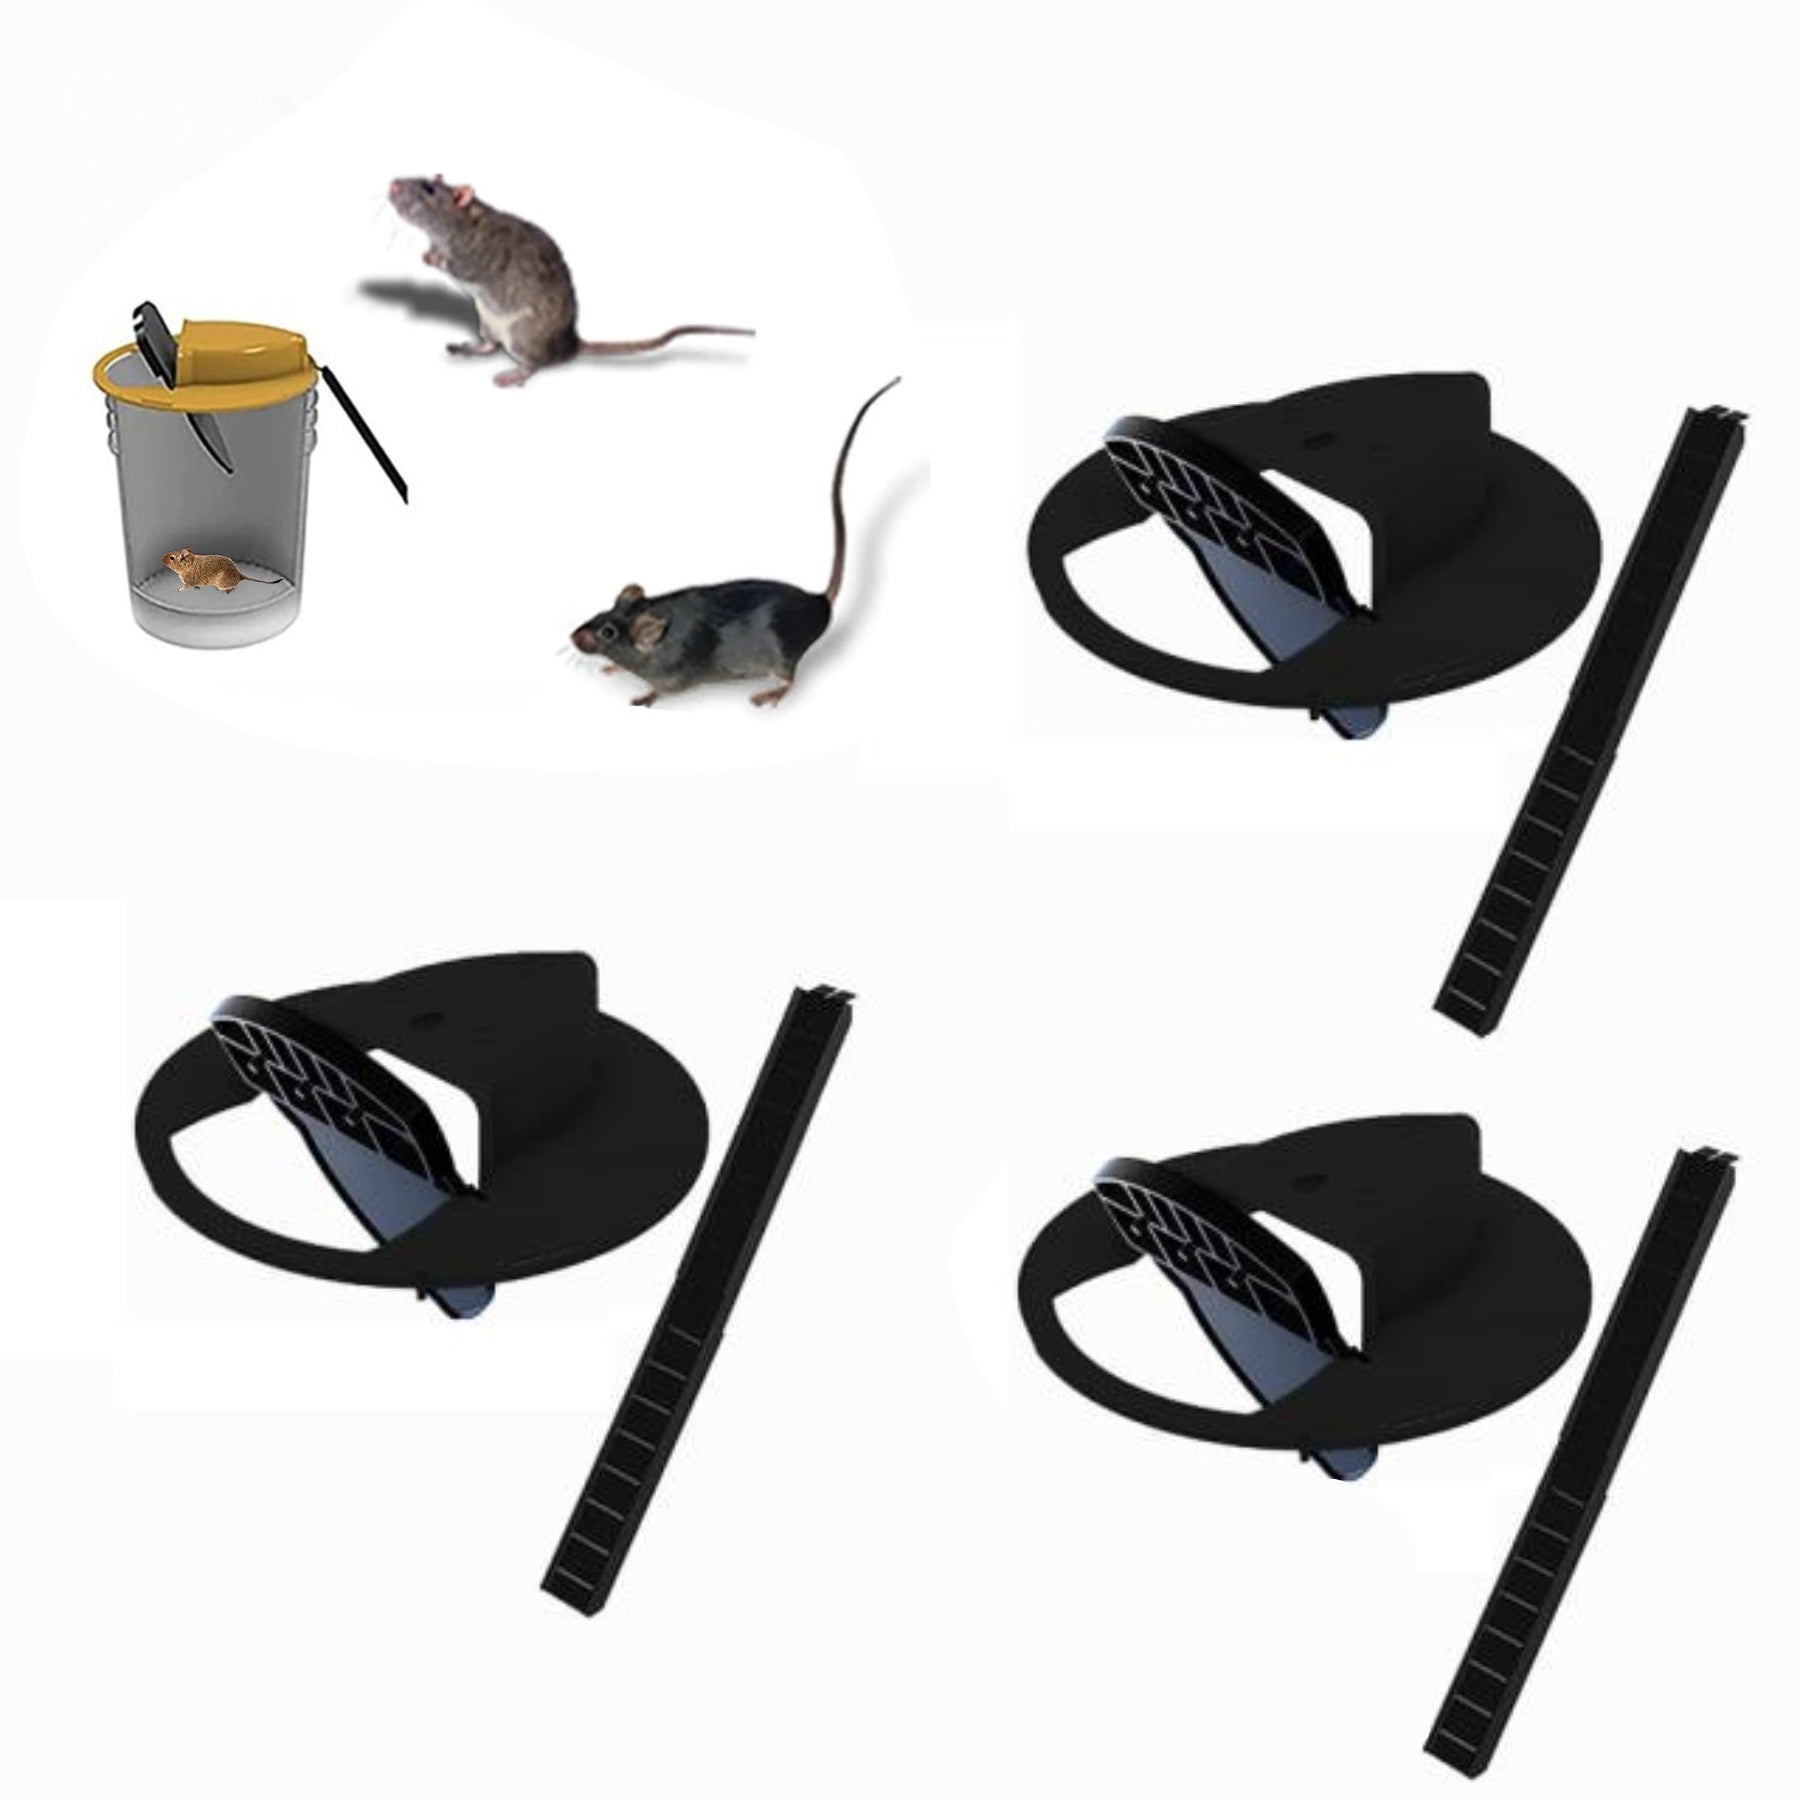 Humane Flip N' Slide Bucket Flip-Lid Mouse and Rat Trap by The Gadget Shack Shop